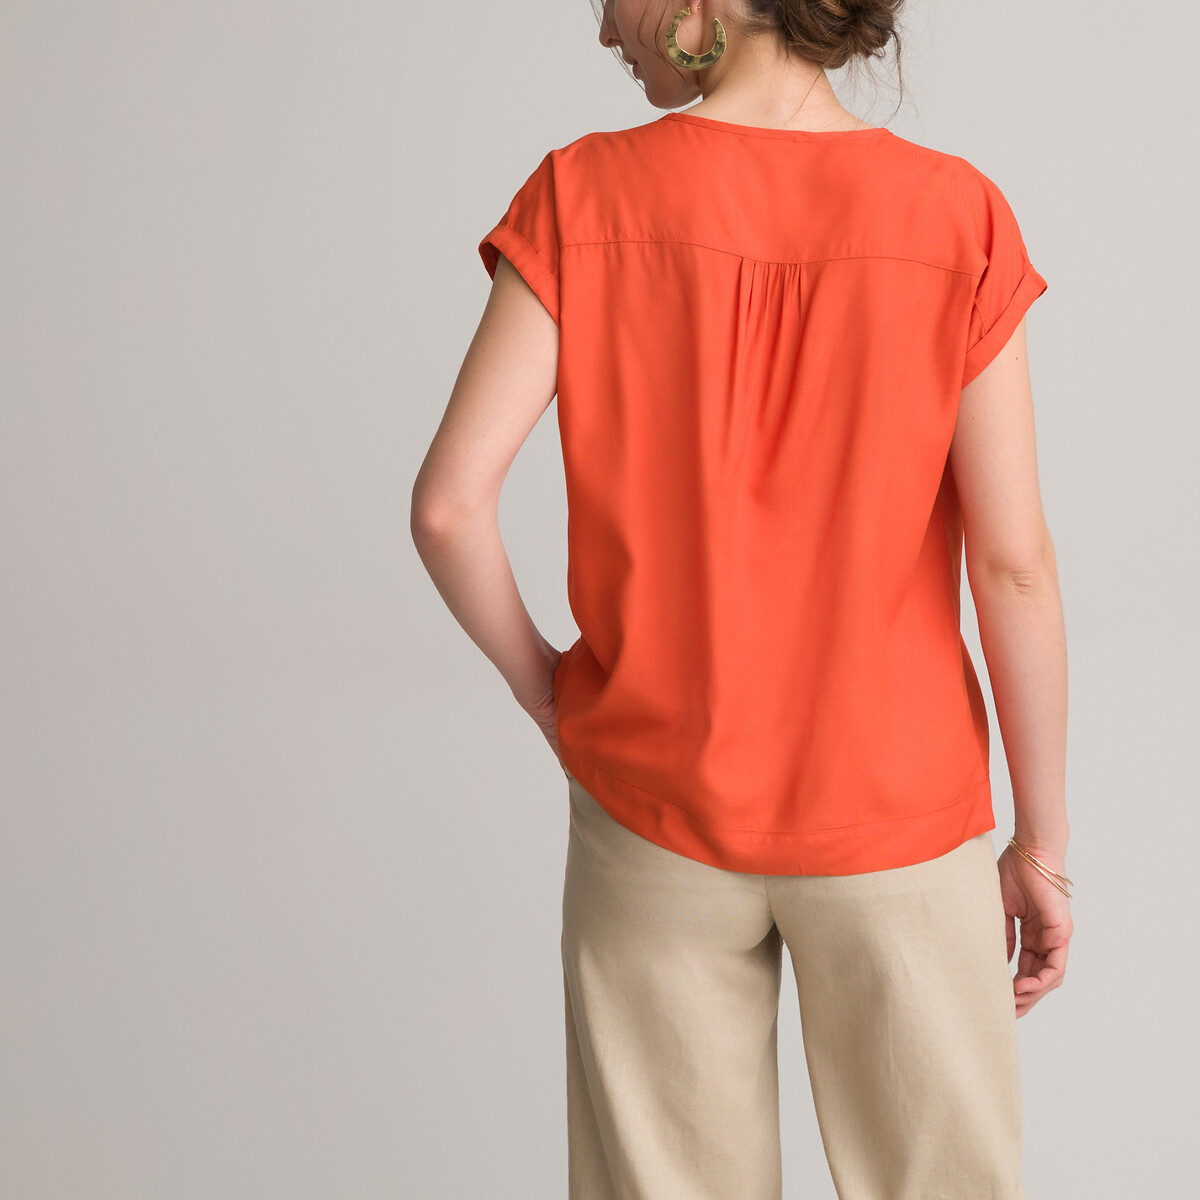 Блузка ANNE WEYBURN С вышивкой круглый вырез короткие рукава 46 (FR) - 52 (RUS) оранжевый, размер 46 (FR) - 52 (RUS) С вышивкой круглый вырез короткие рукава 46 (FR) - 52 (RUS) оранжевый - фото 4